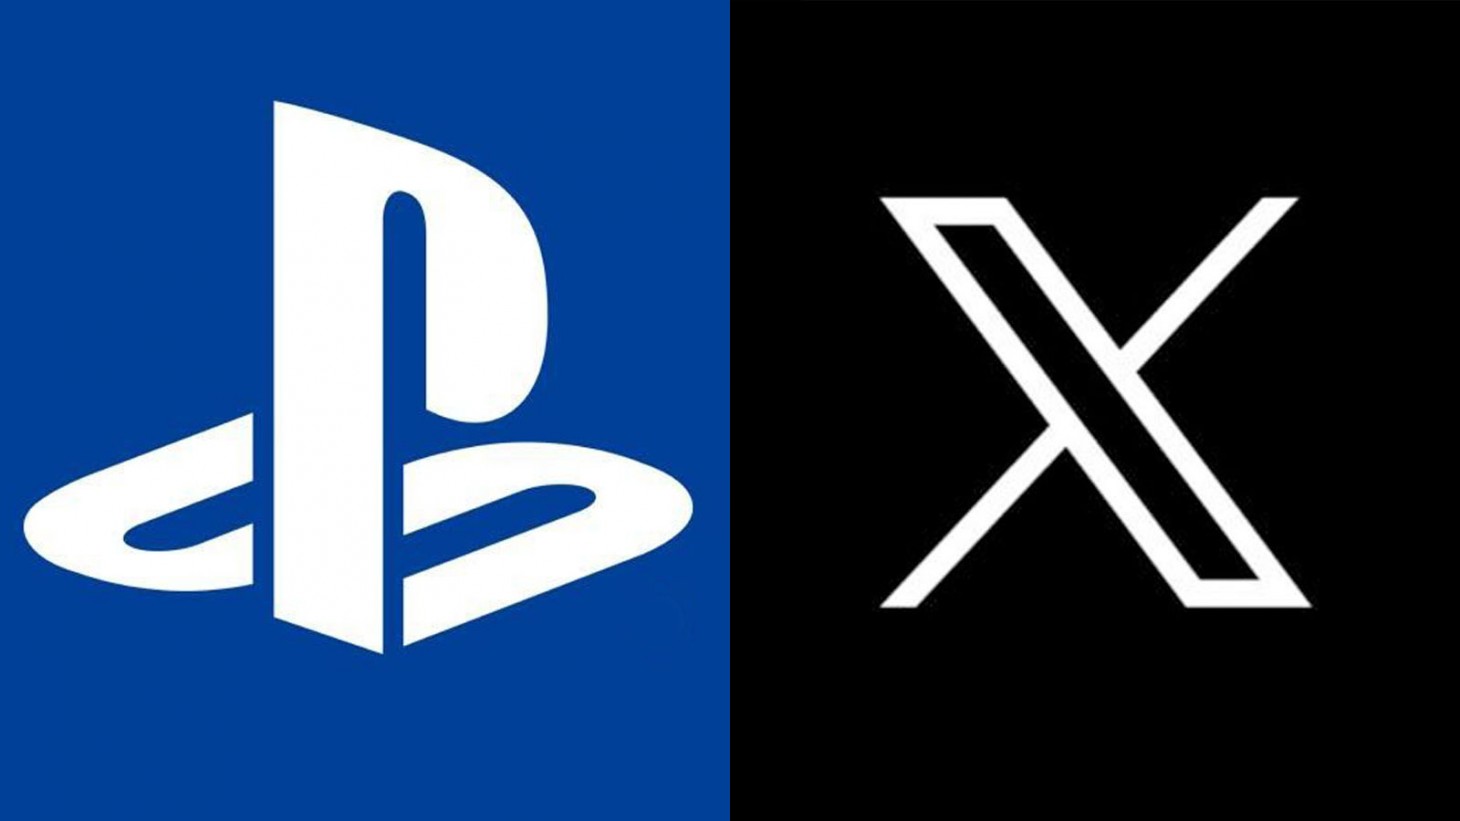 PlayStation ending X integration